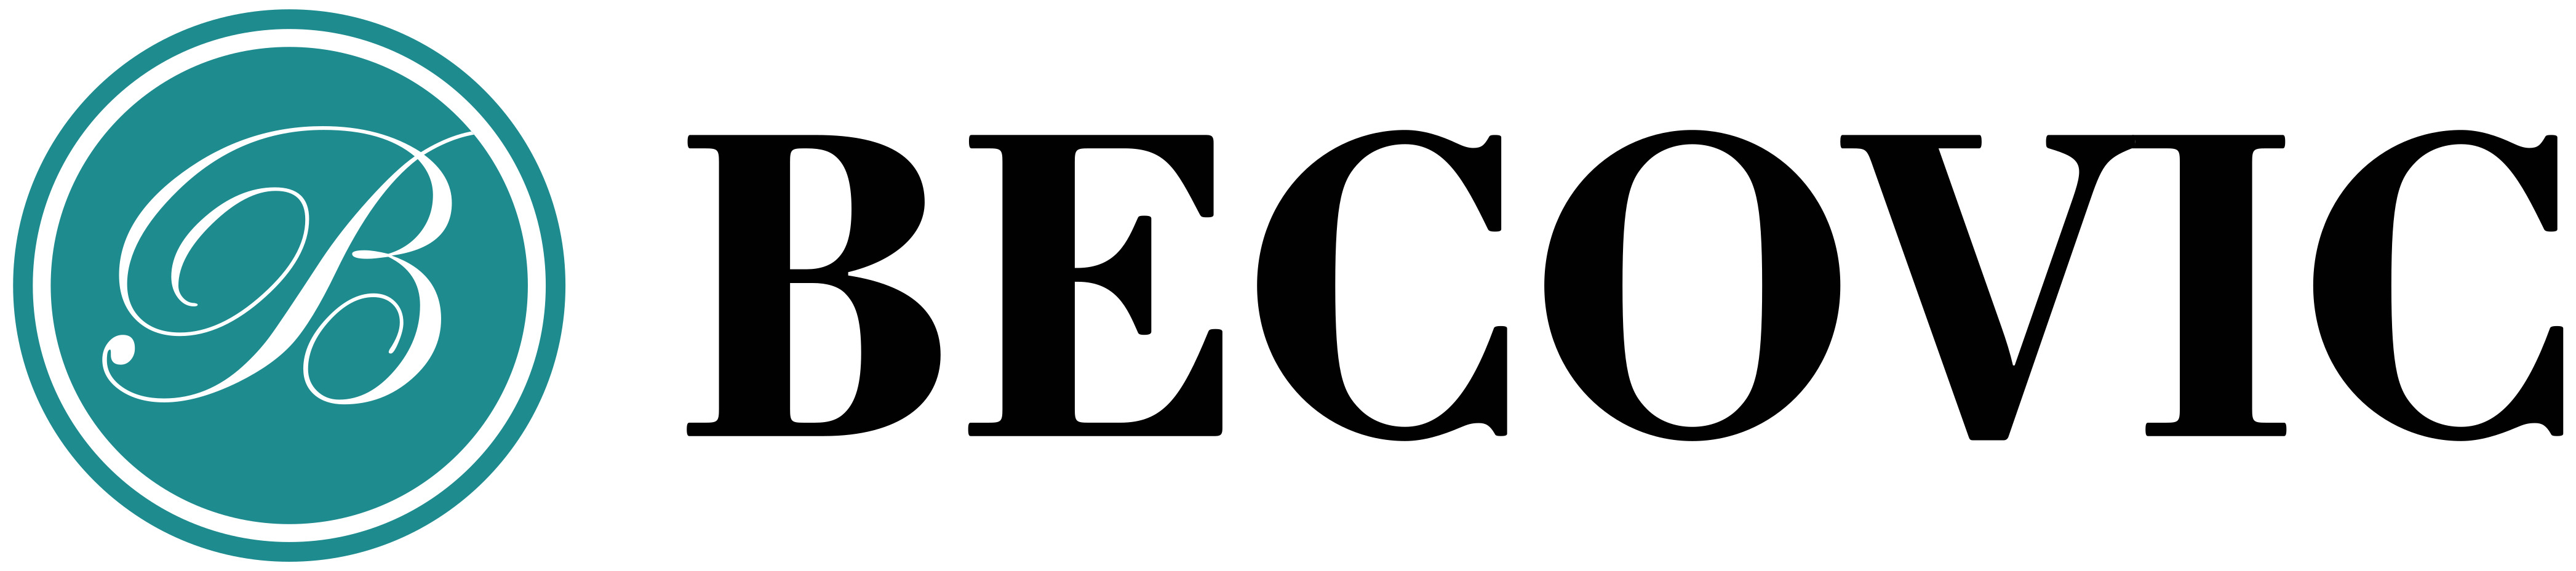 Becovic logo